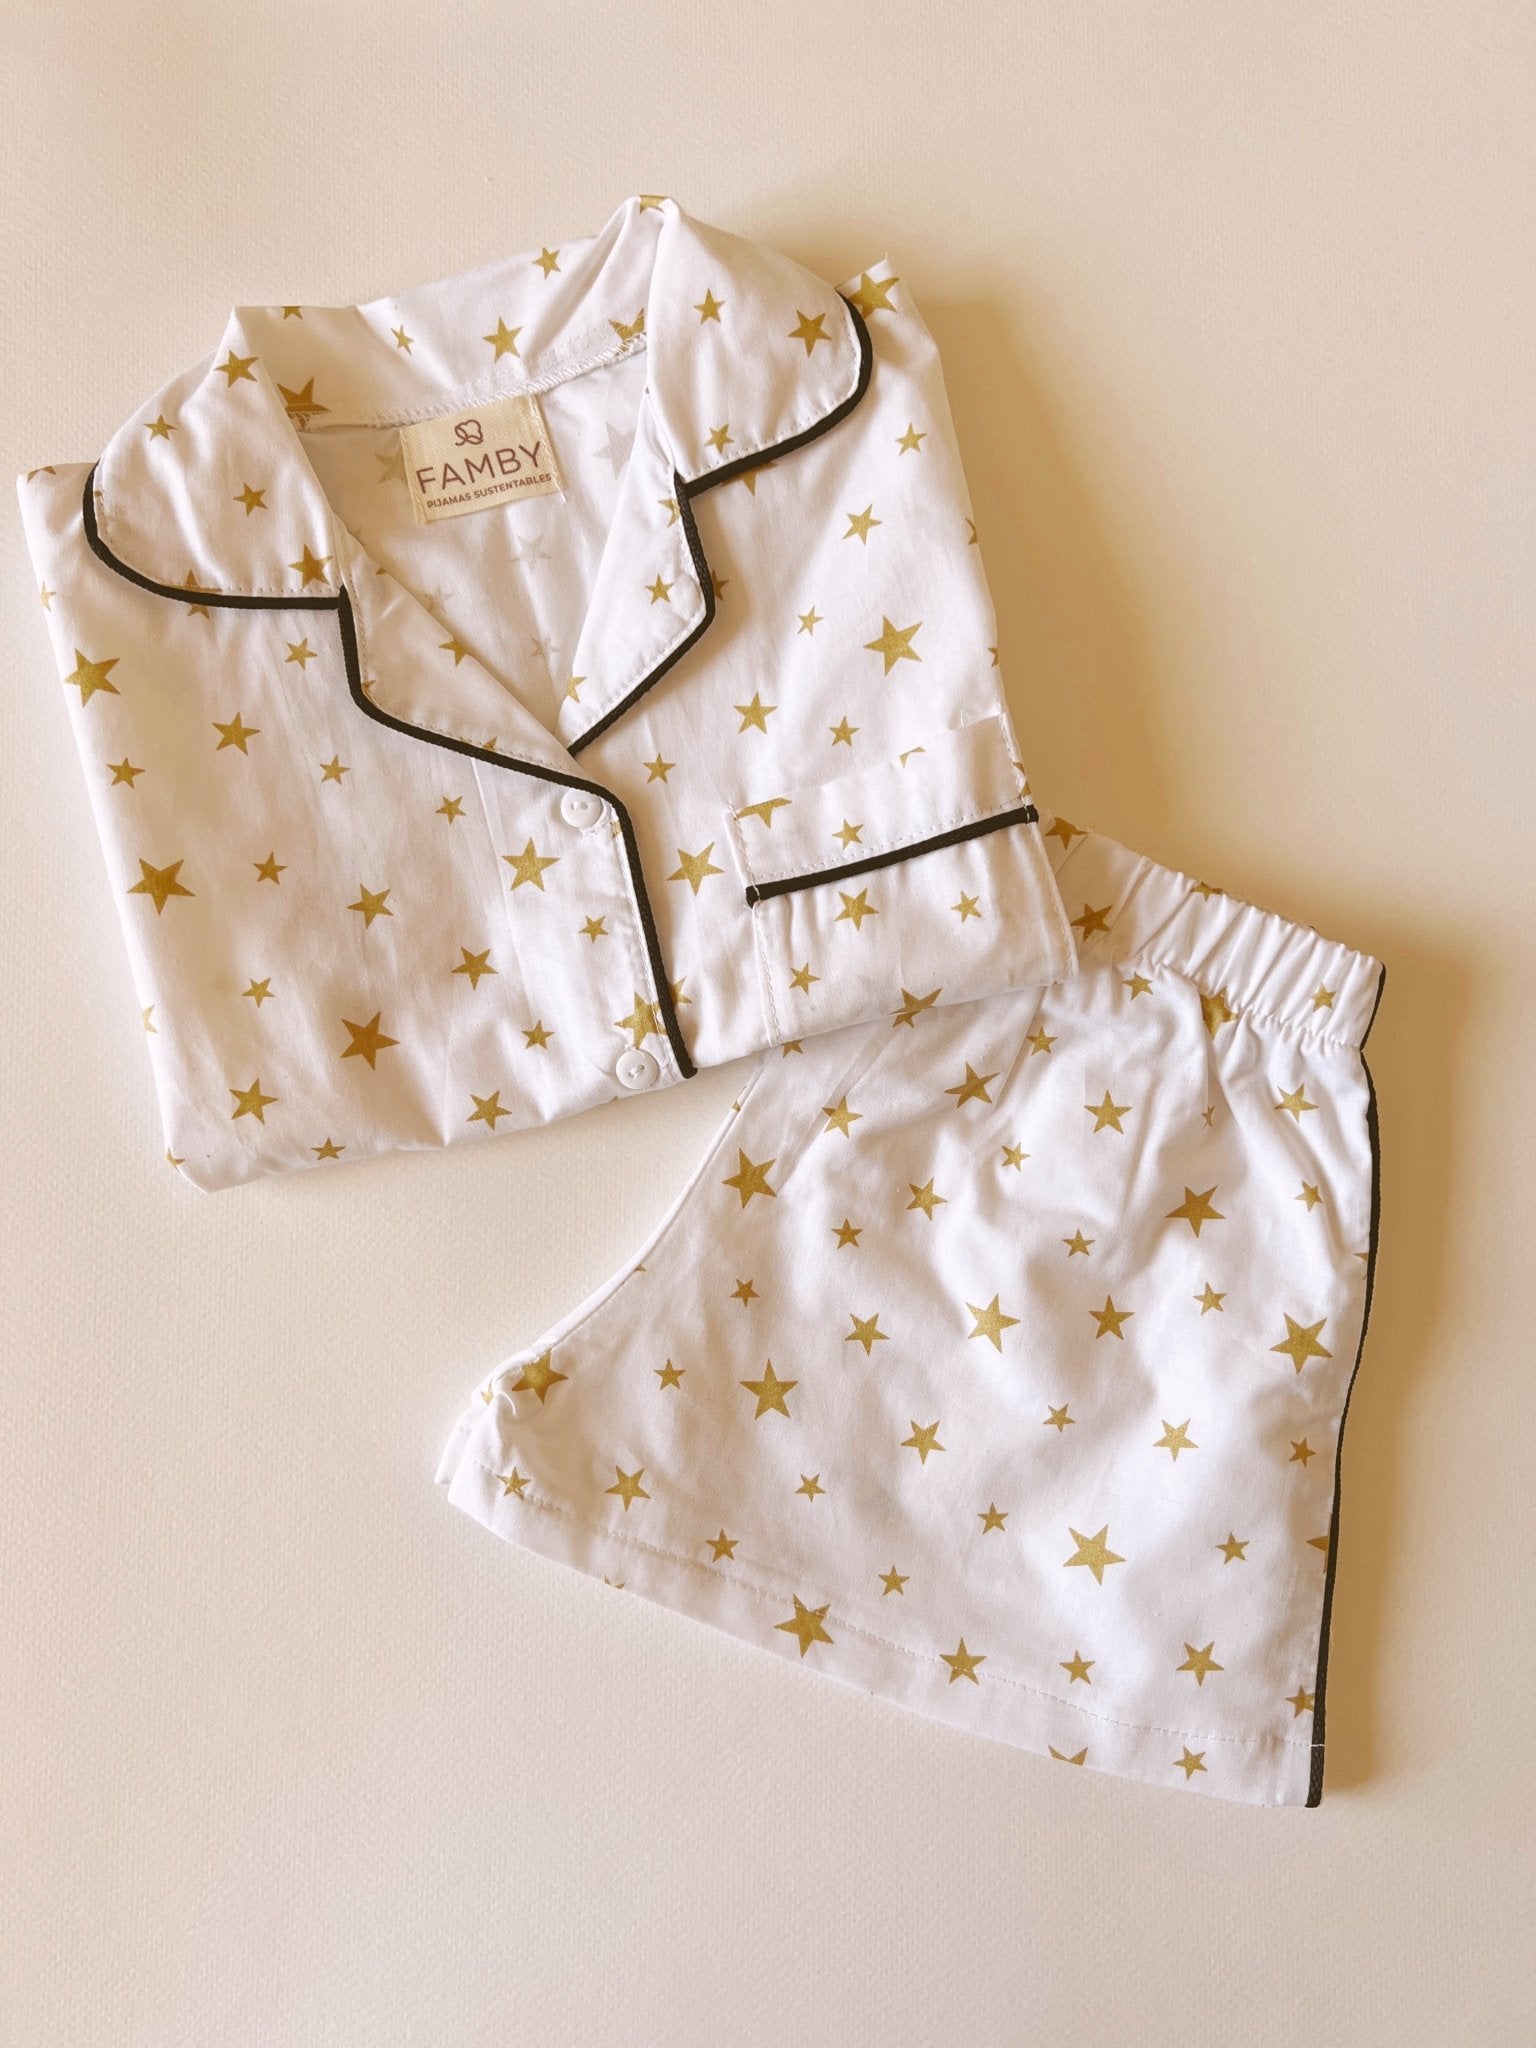 Pijama Infantil Estrellas Gold Fondo Blanco - fambypj